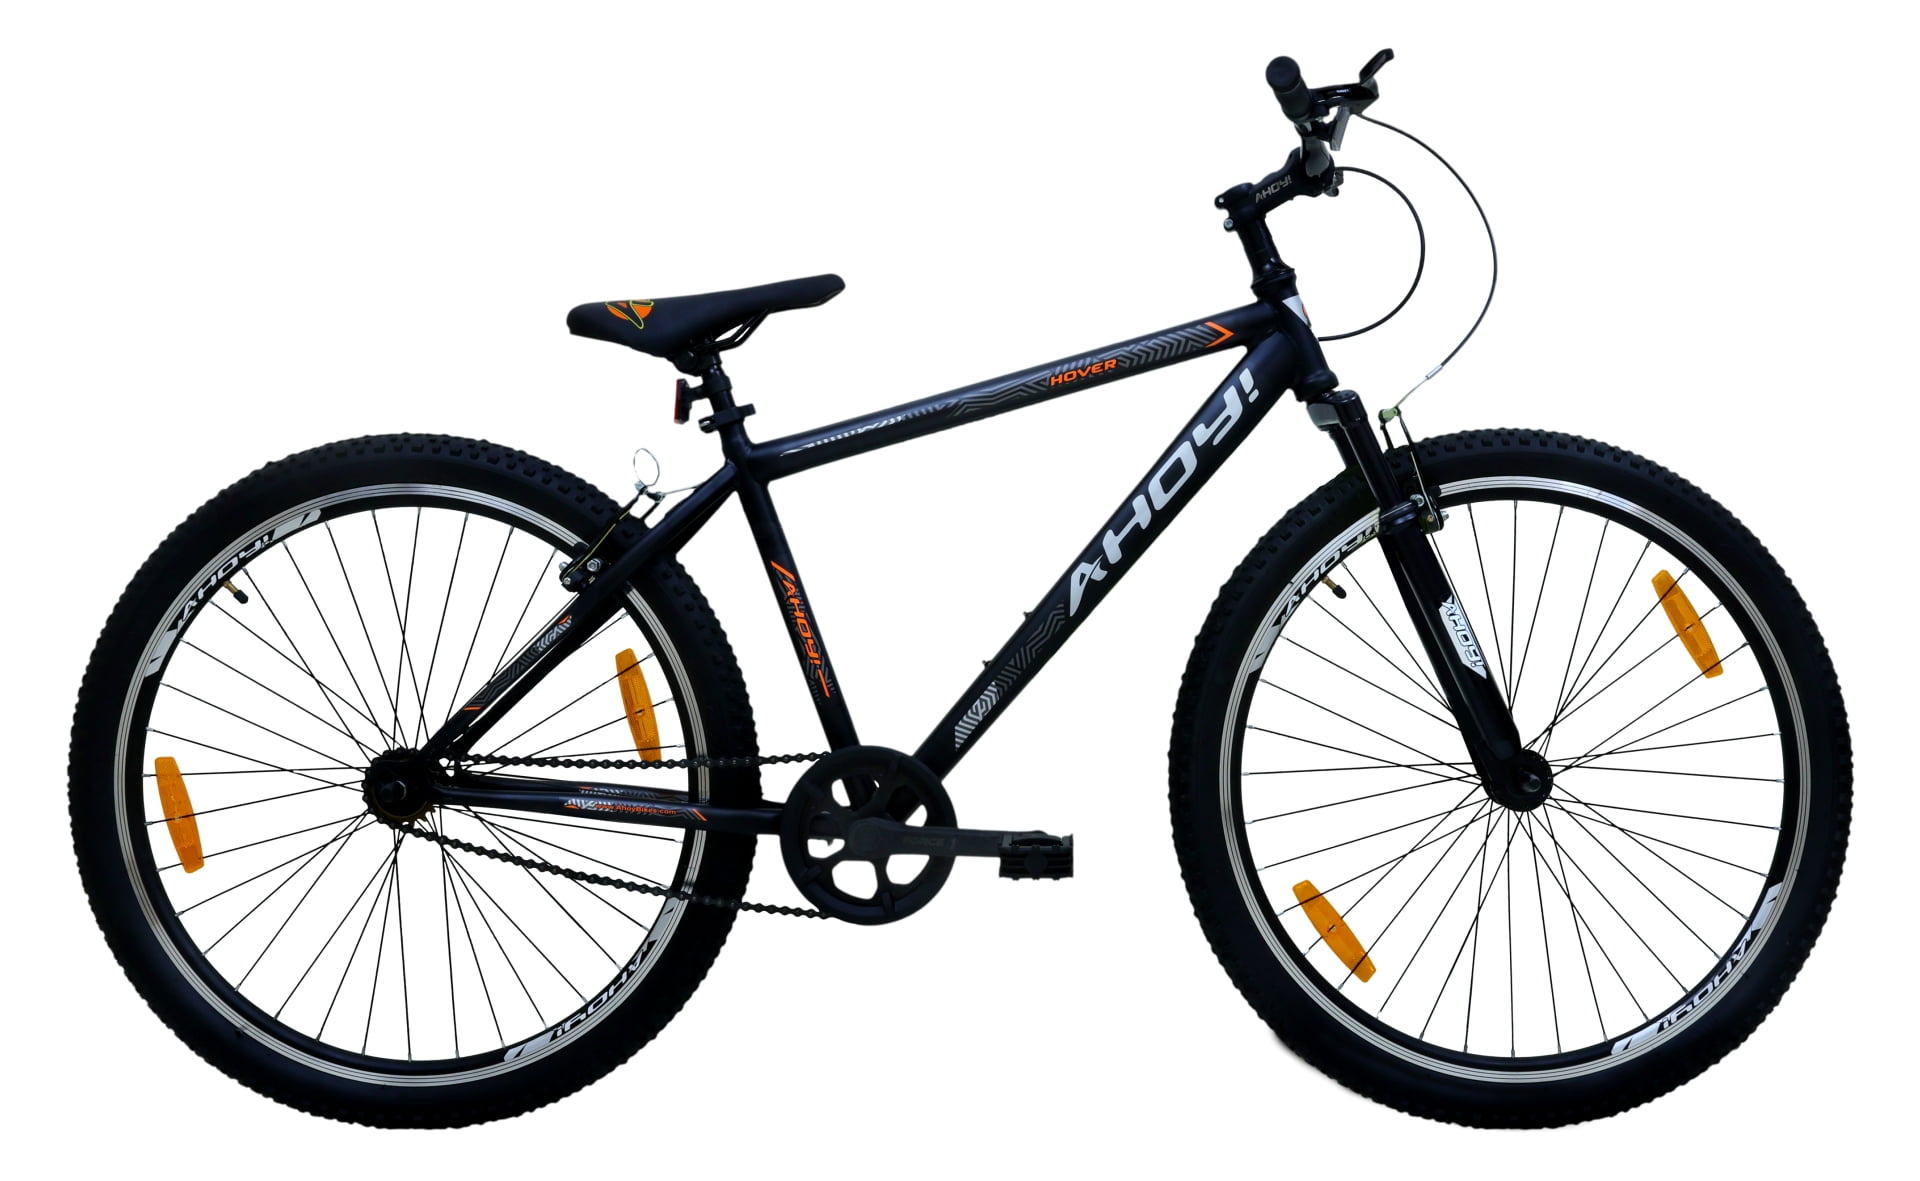 Hover Non Gear Bike 27.5T | Buy Orange Non Gear Cycle for Men